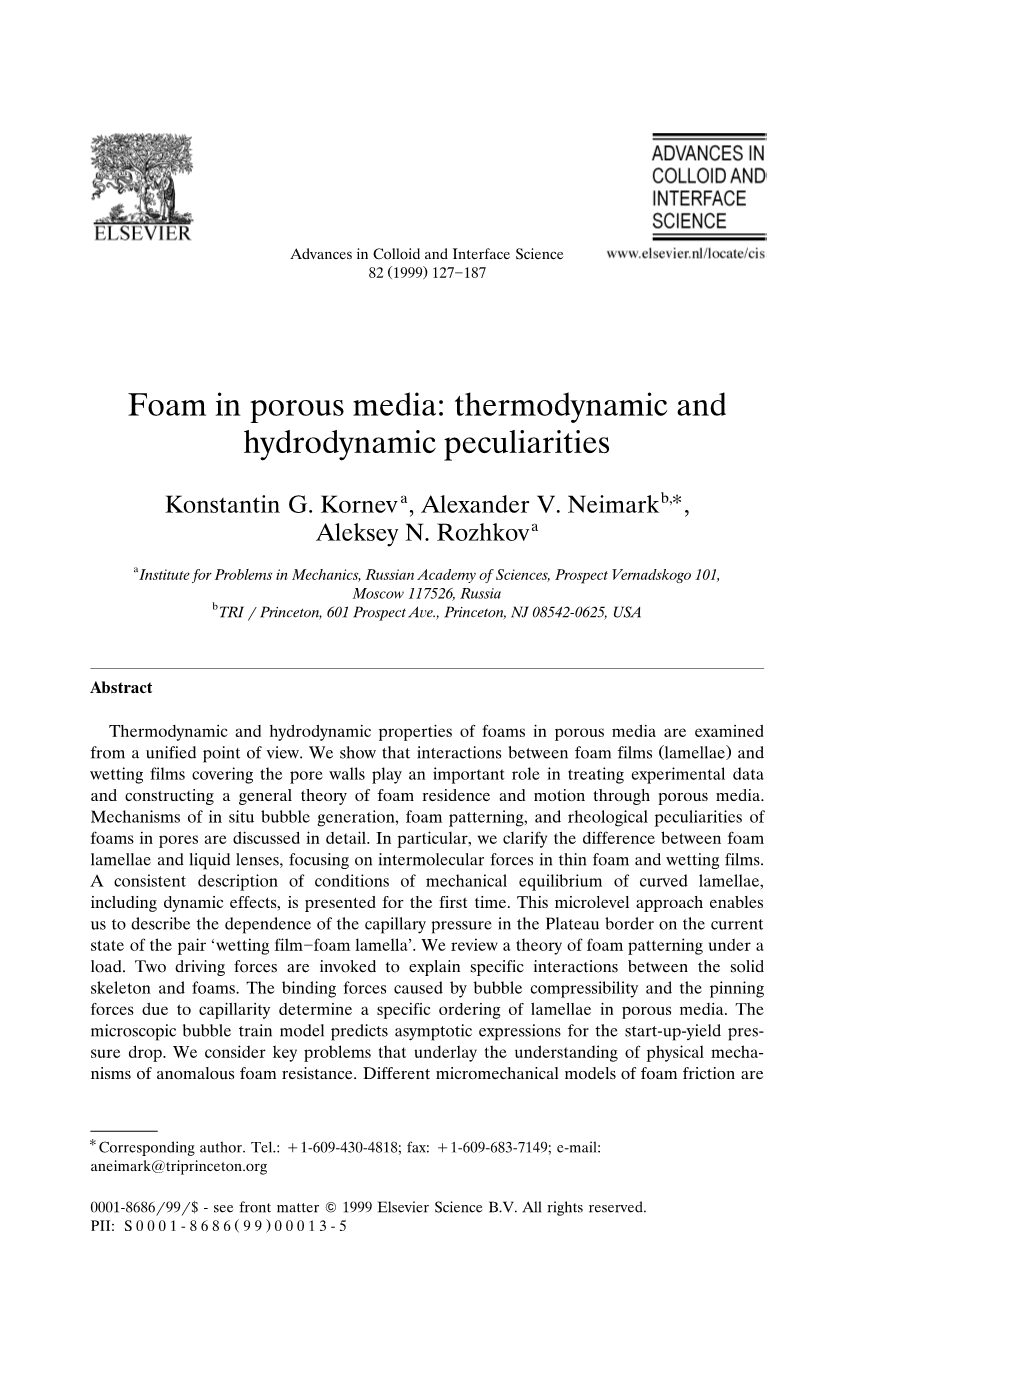 Foam in Porous Media: Thermodynamic and Hydrodynamic Peculiarities